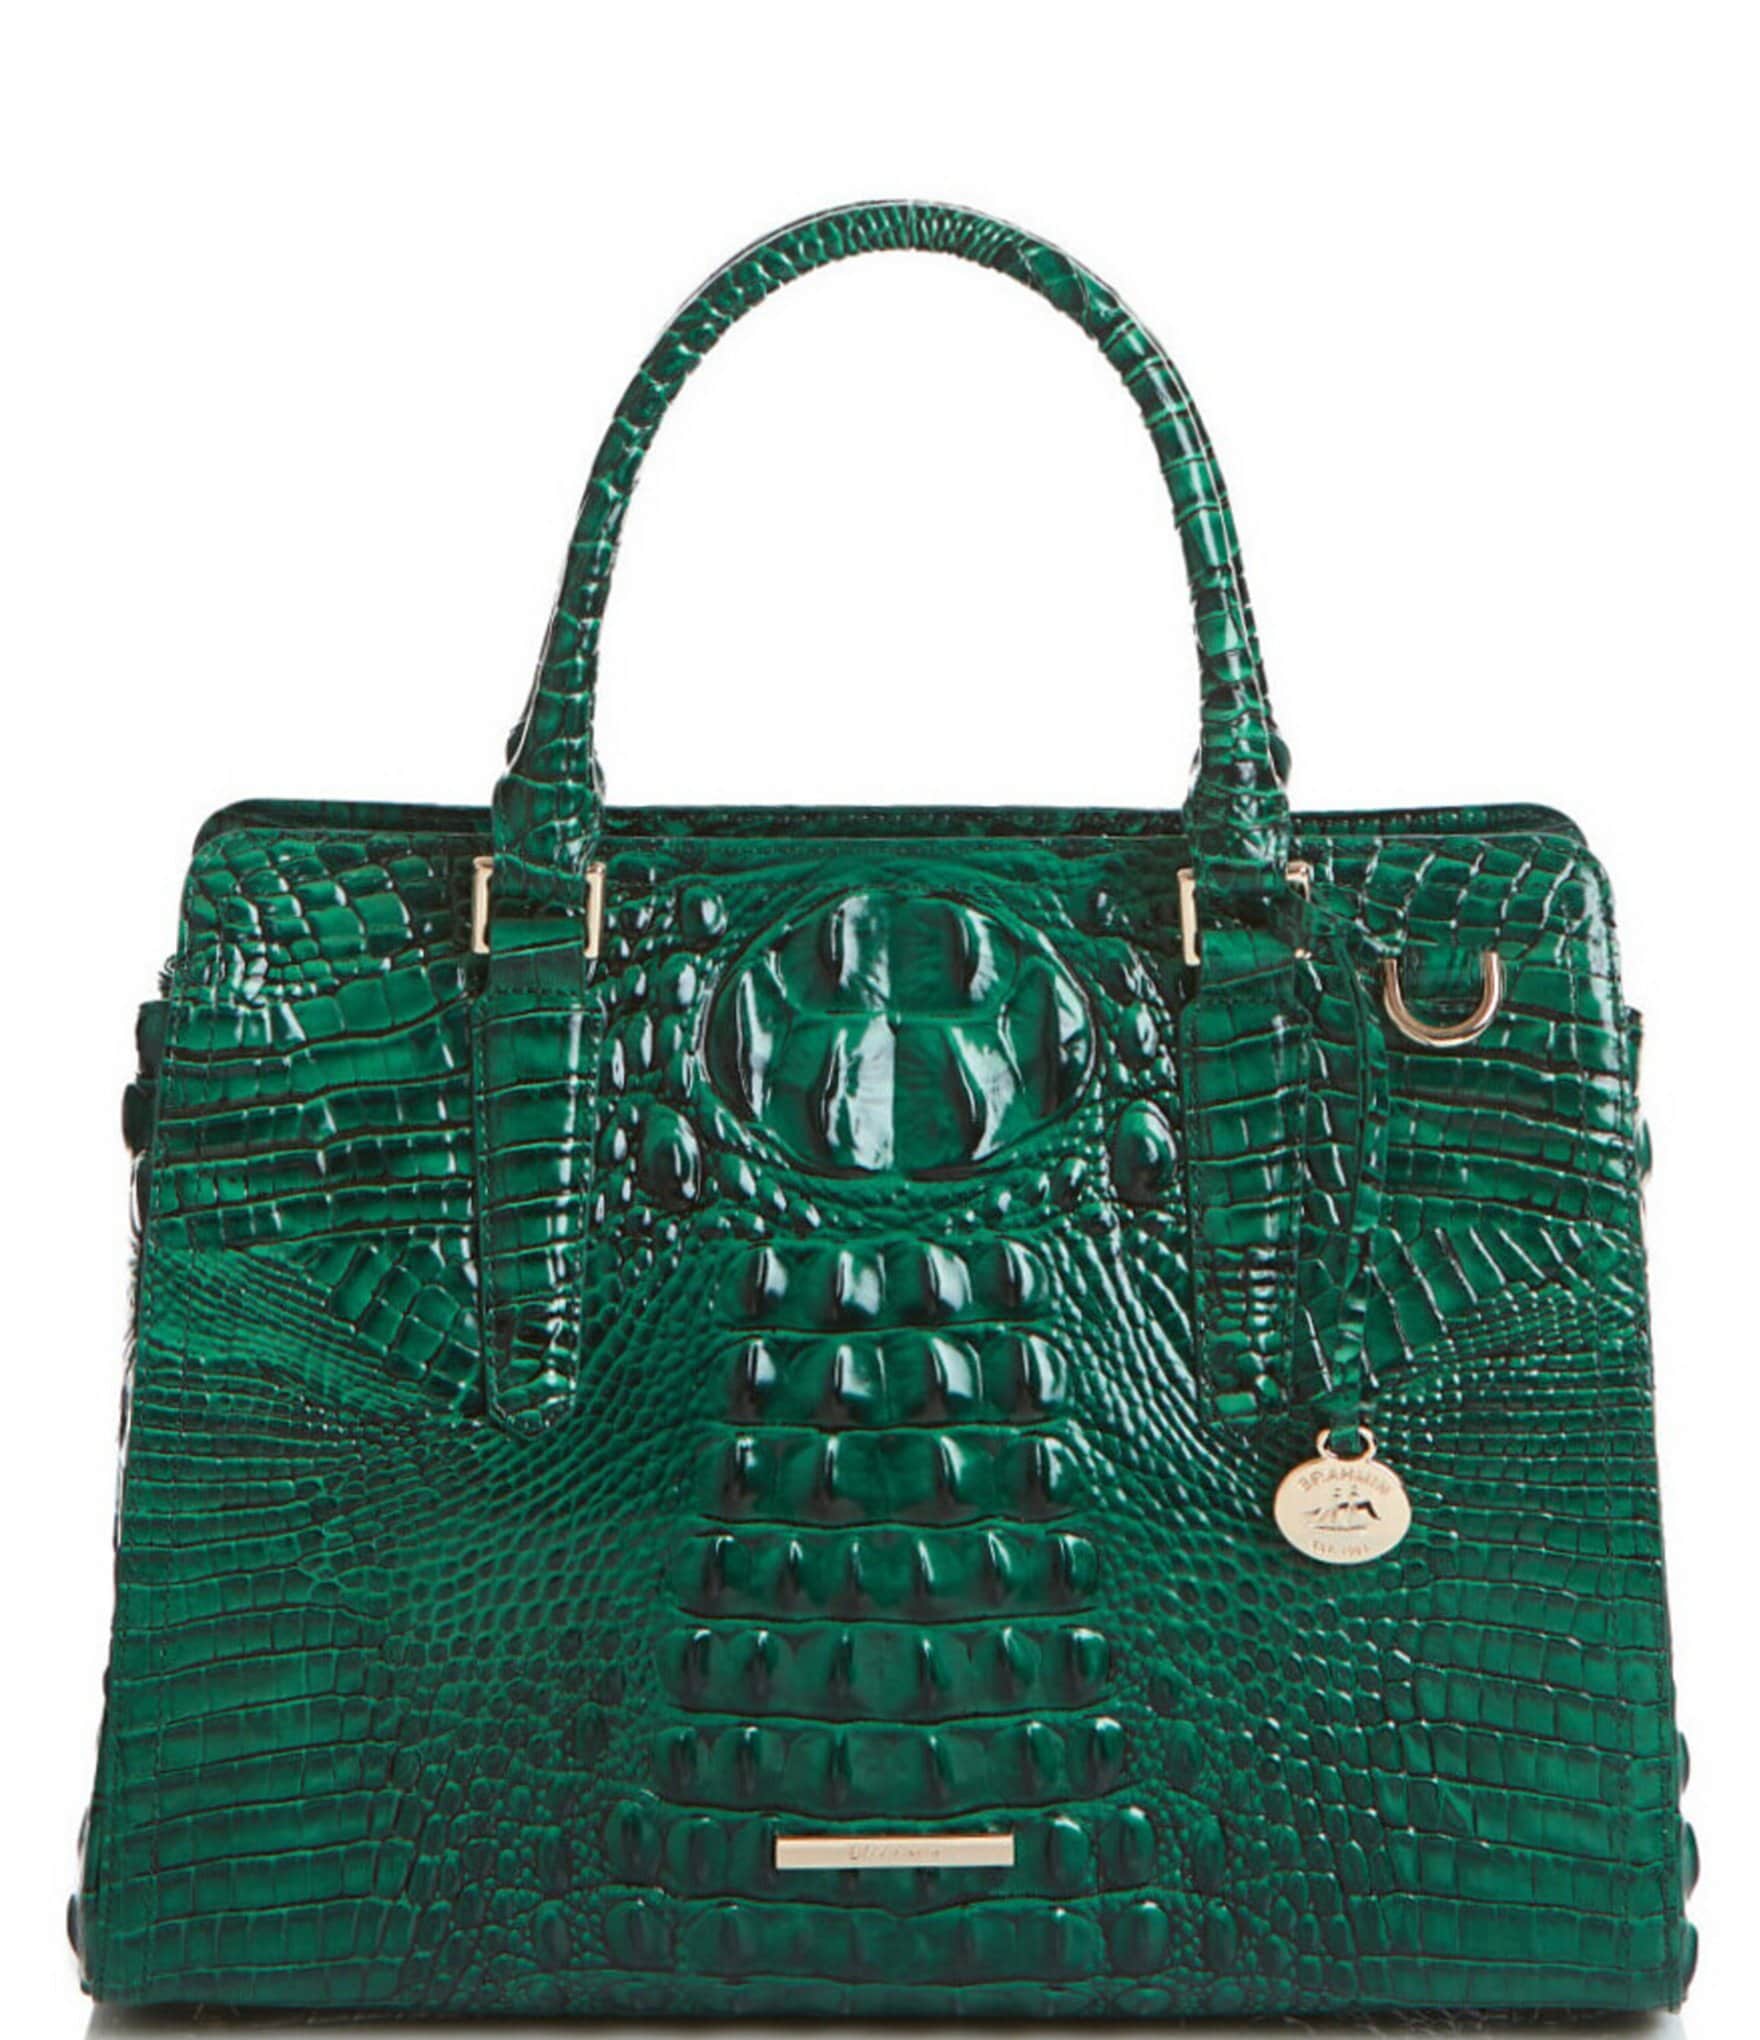 NWT Brahmin Handbag. Lime Green. - clothing & accessories - by